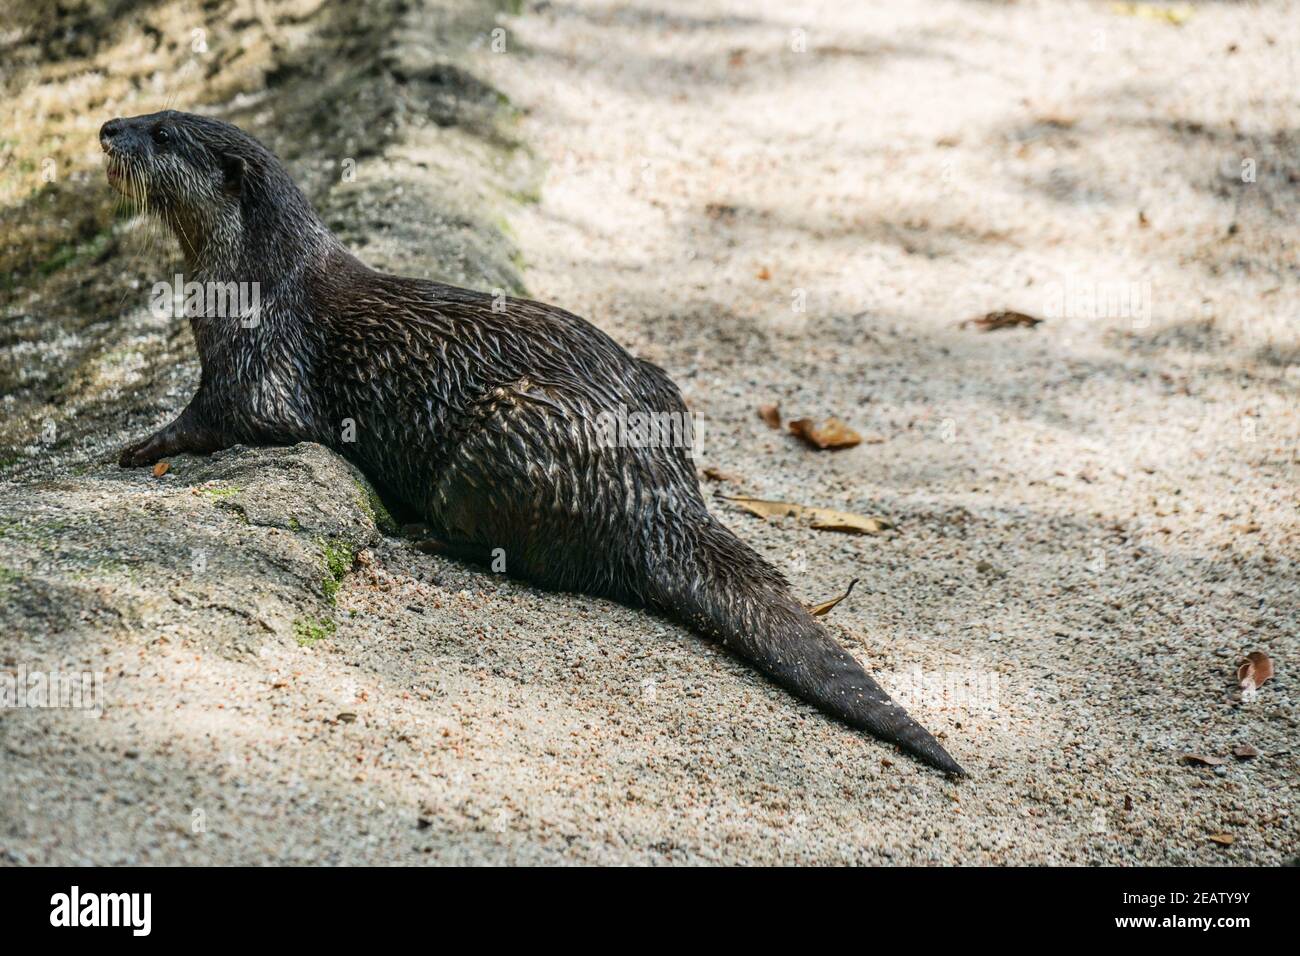 Cute orientale piccolo-clawed lontra immagine di Foto Stock